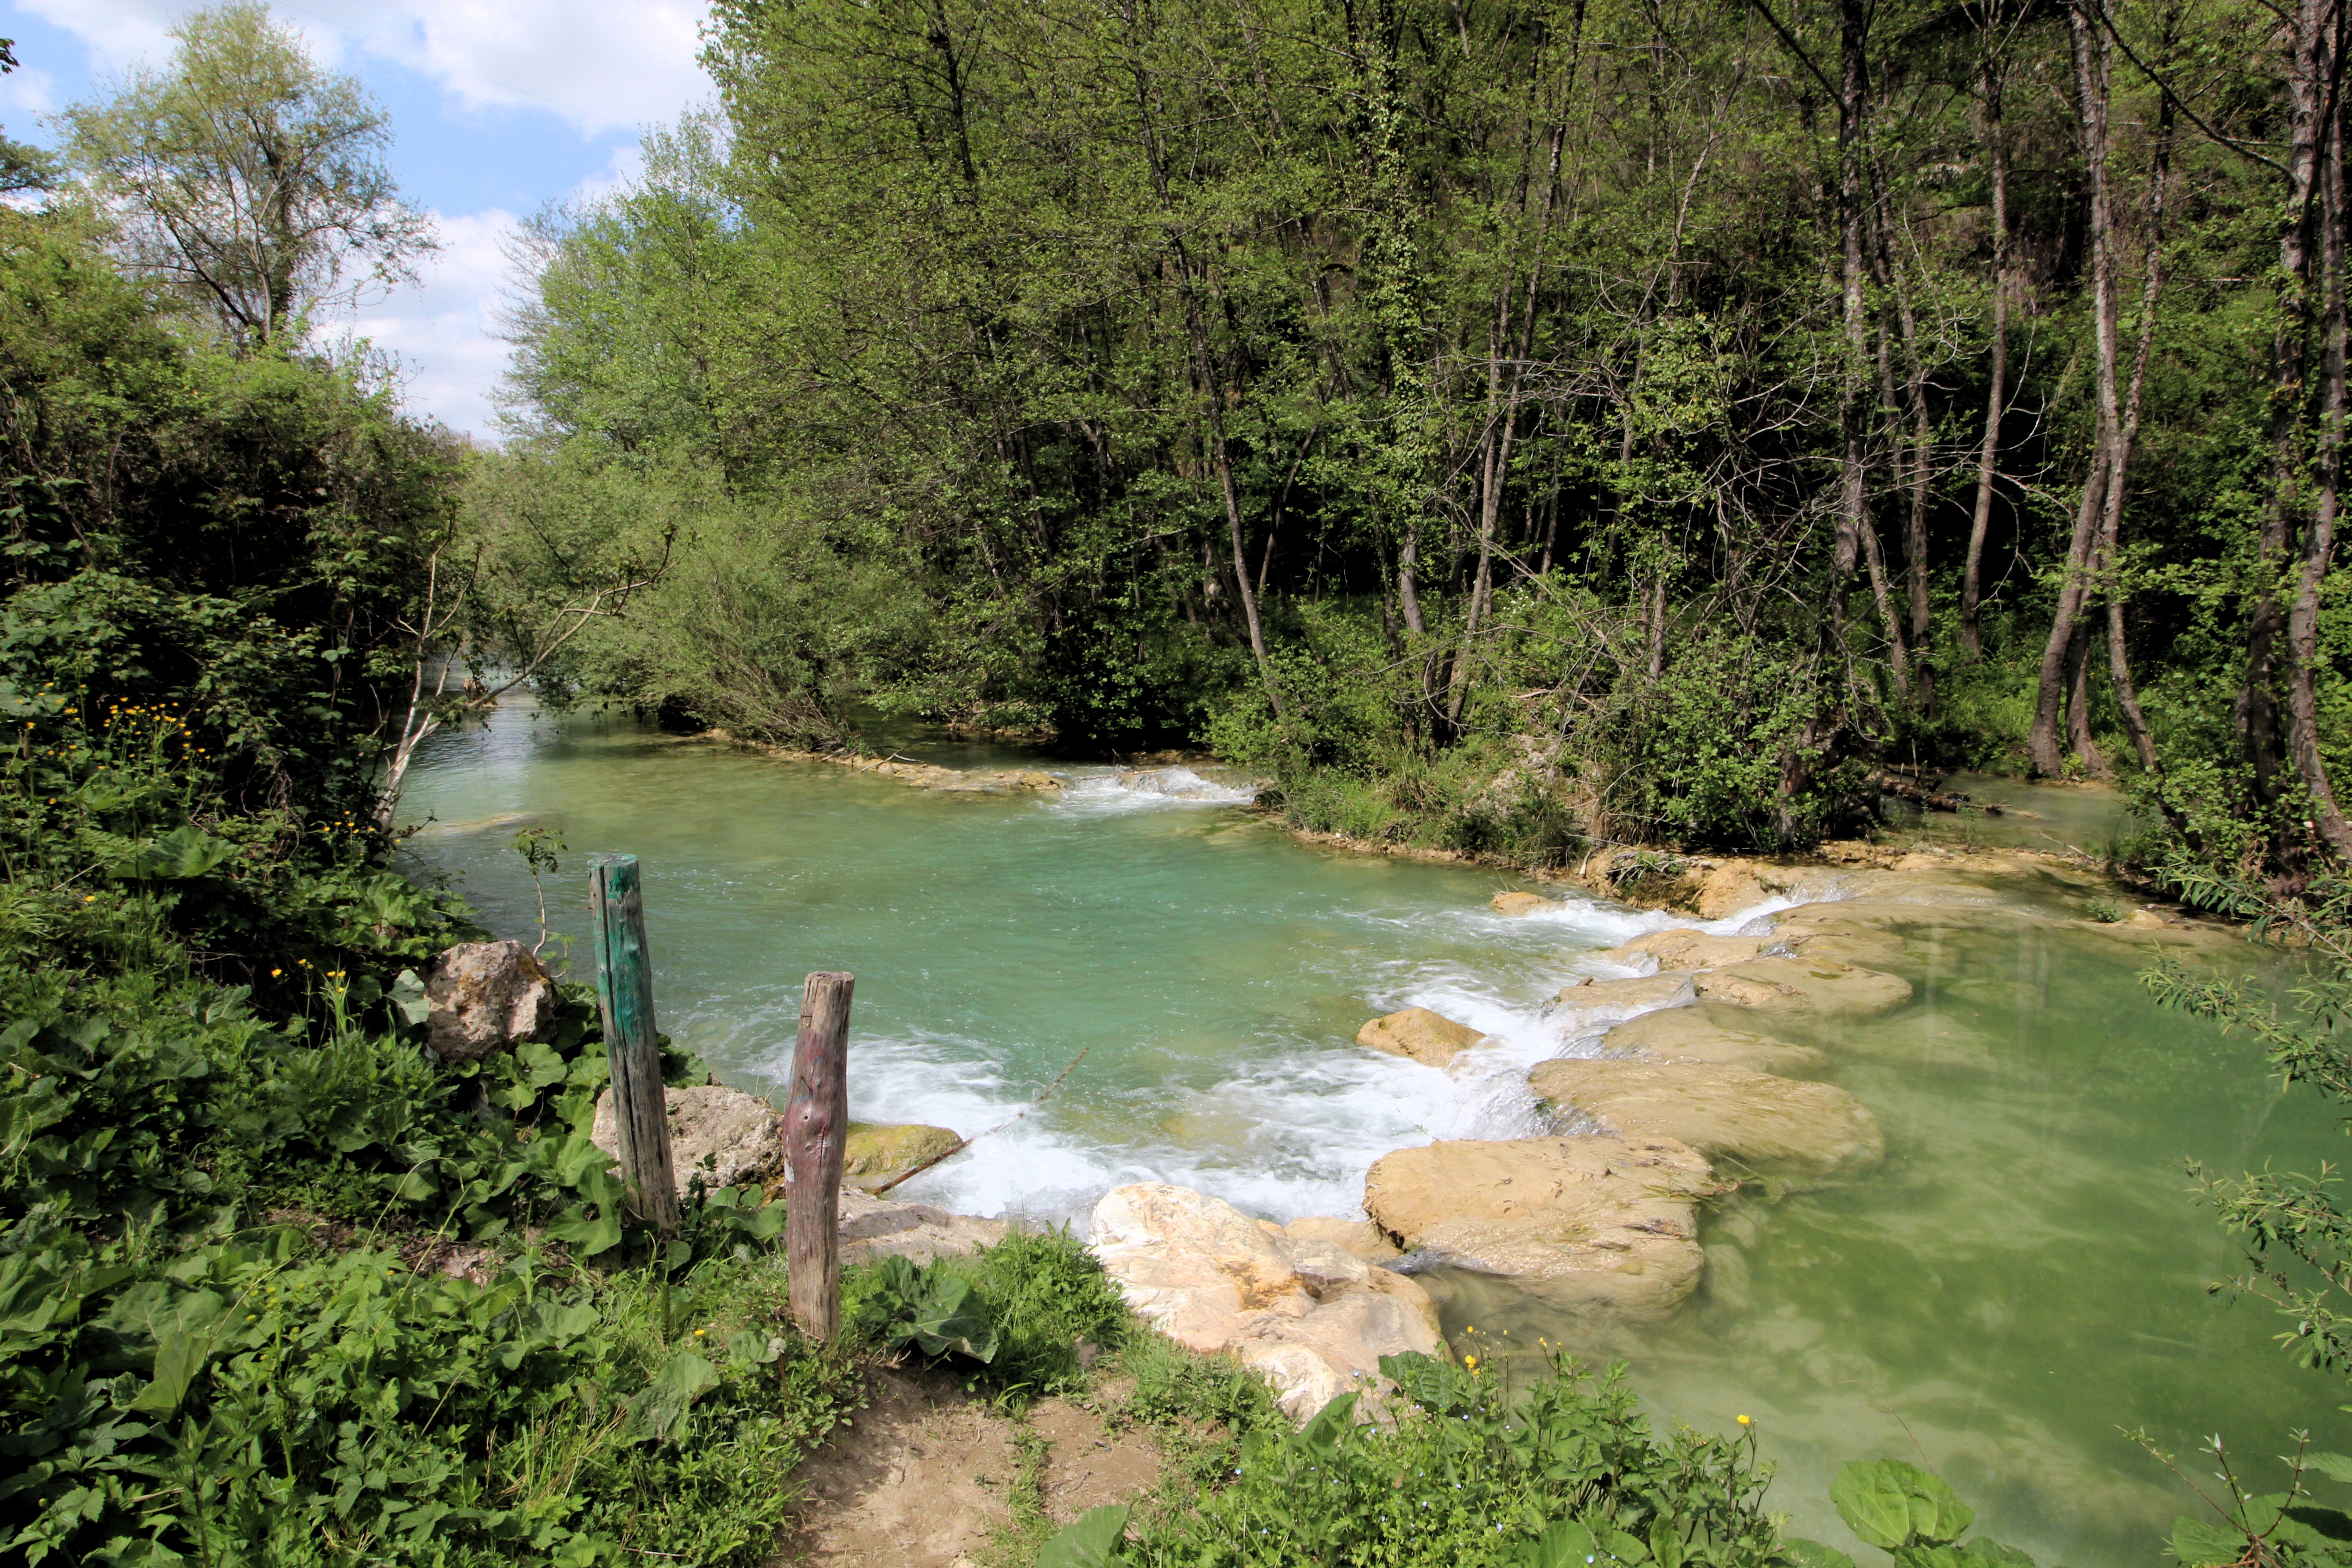 Parco fluviale dell'Alta Val d'Elsa, ponticino